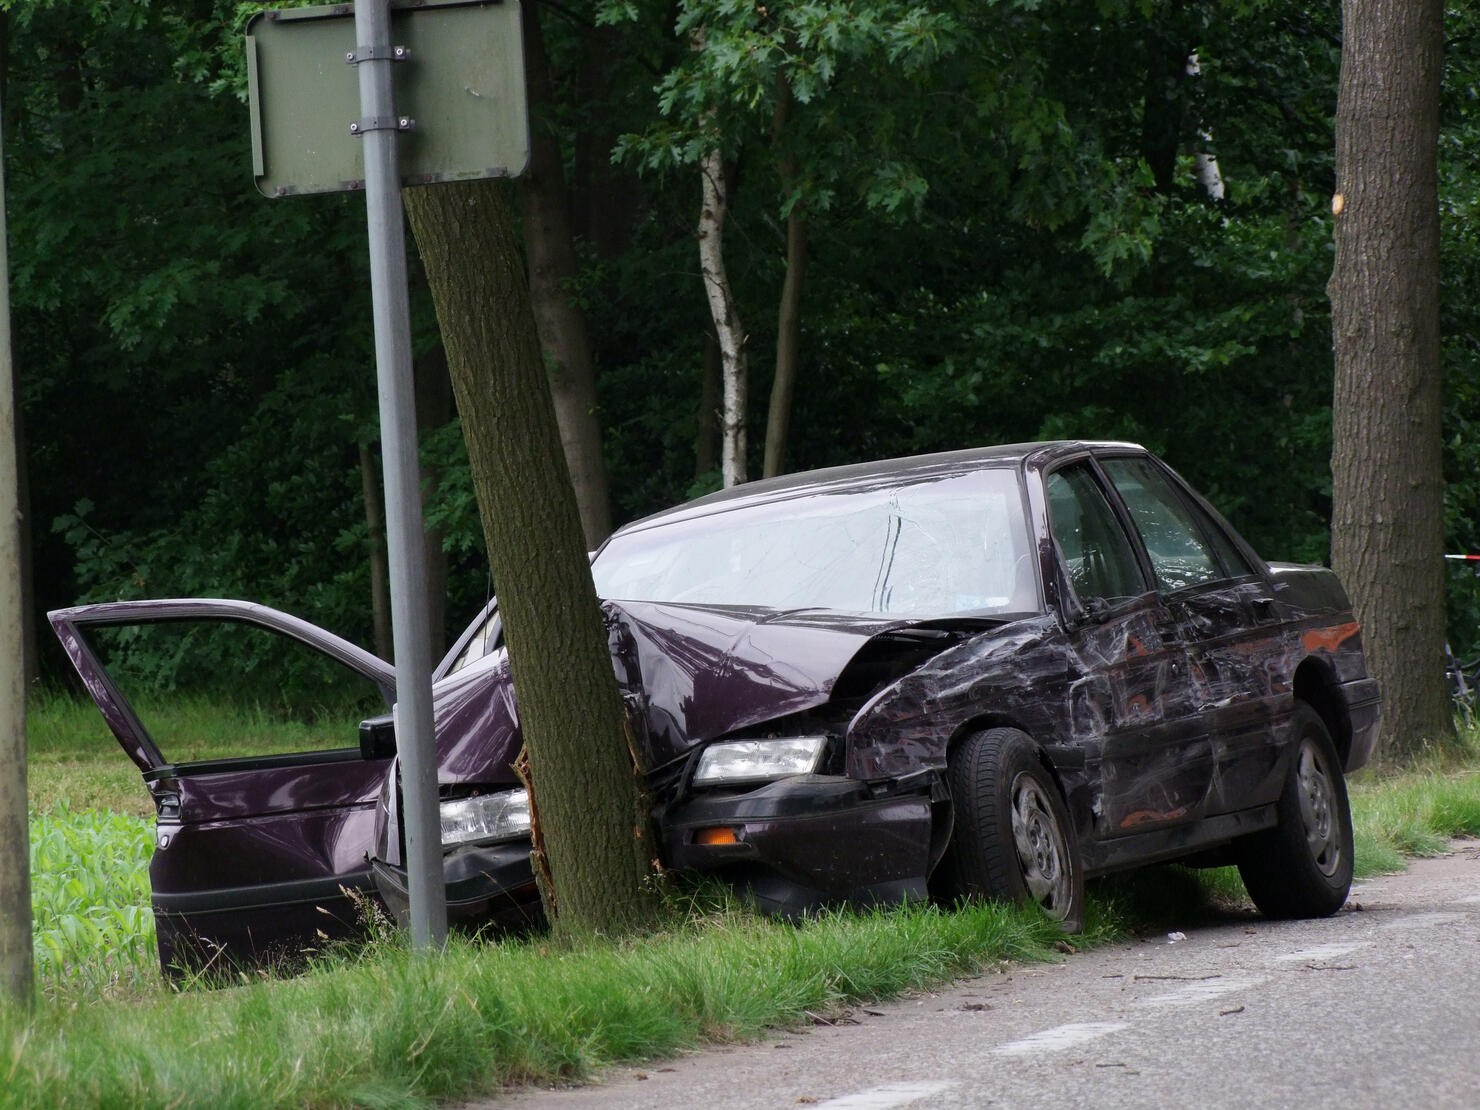 Purple car crashed, head on into a tree near the road 